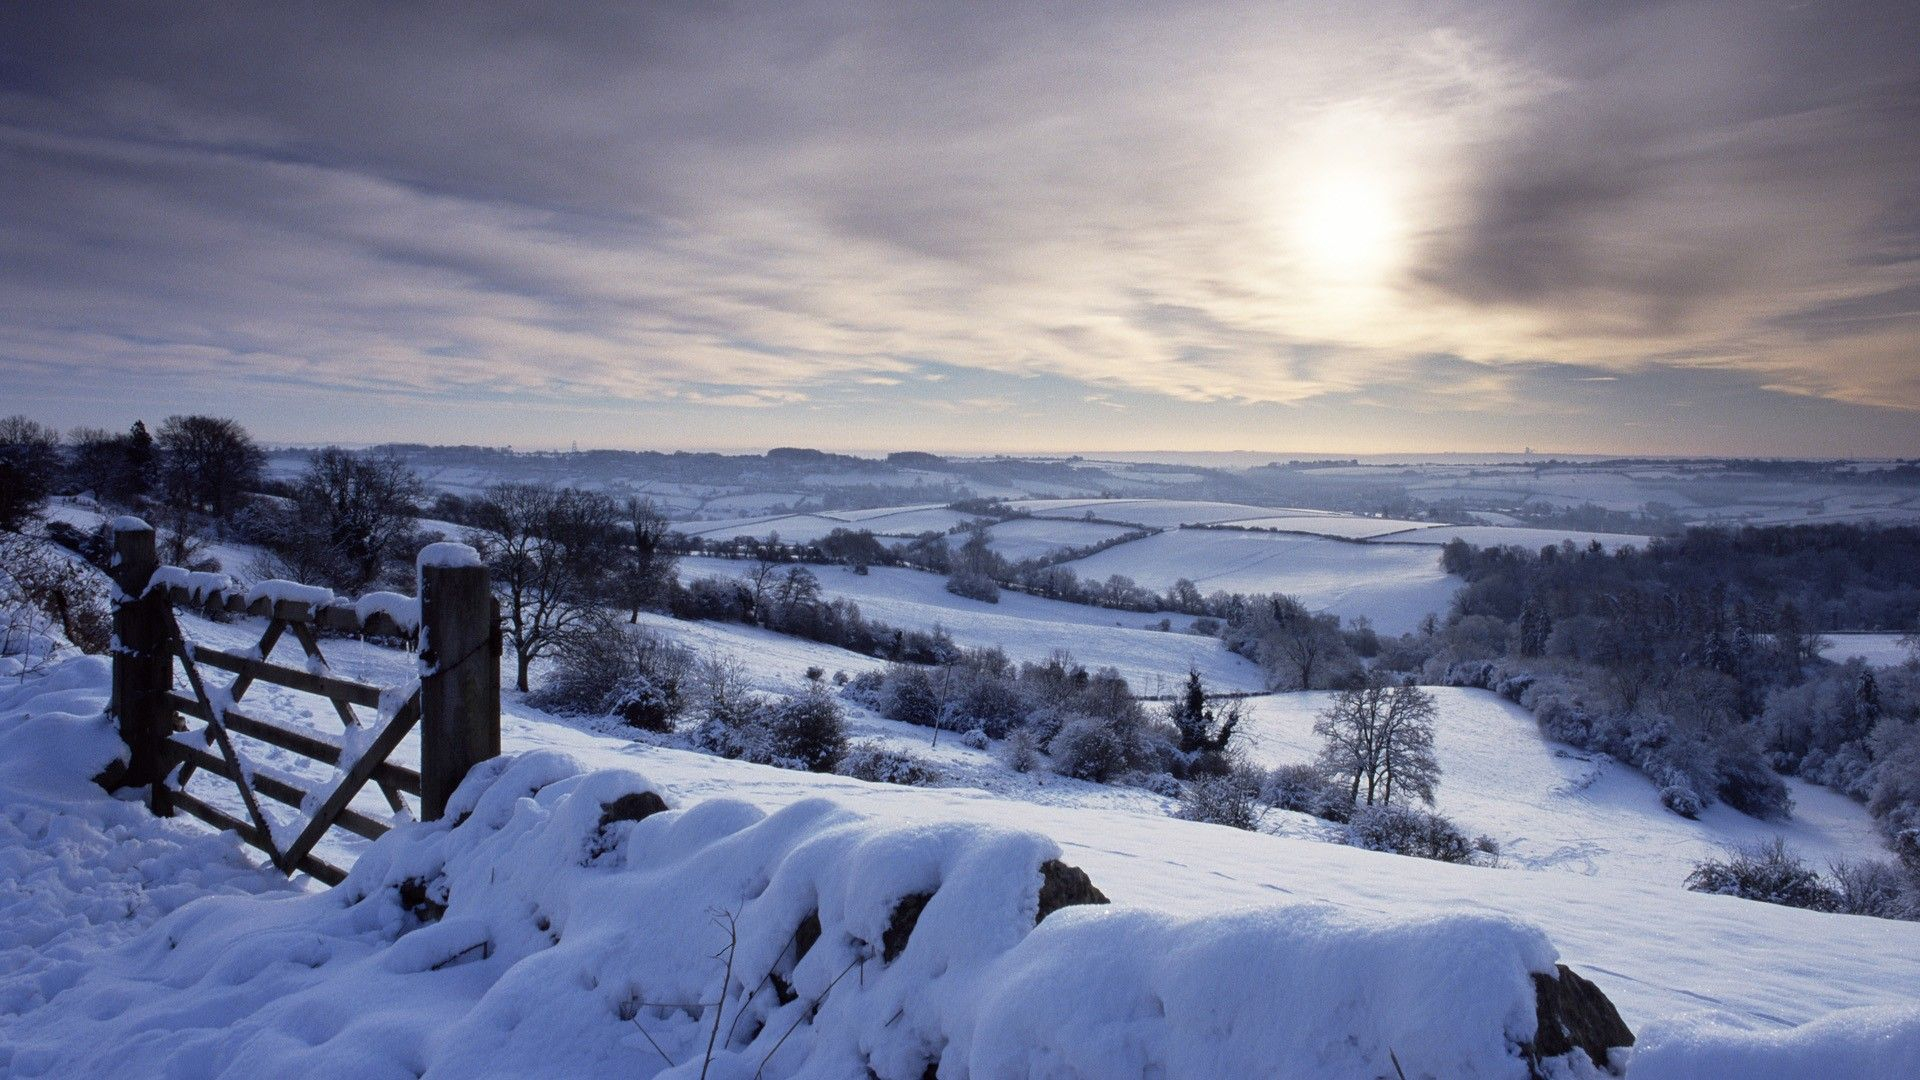 1920x1080 Winter in the English countryside | Winter landscape, Landscape wallpaper, Winter scenery